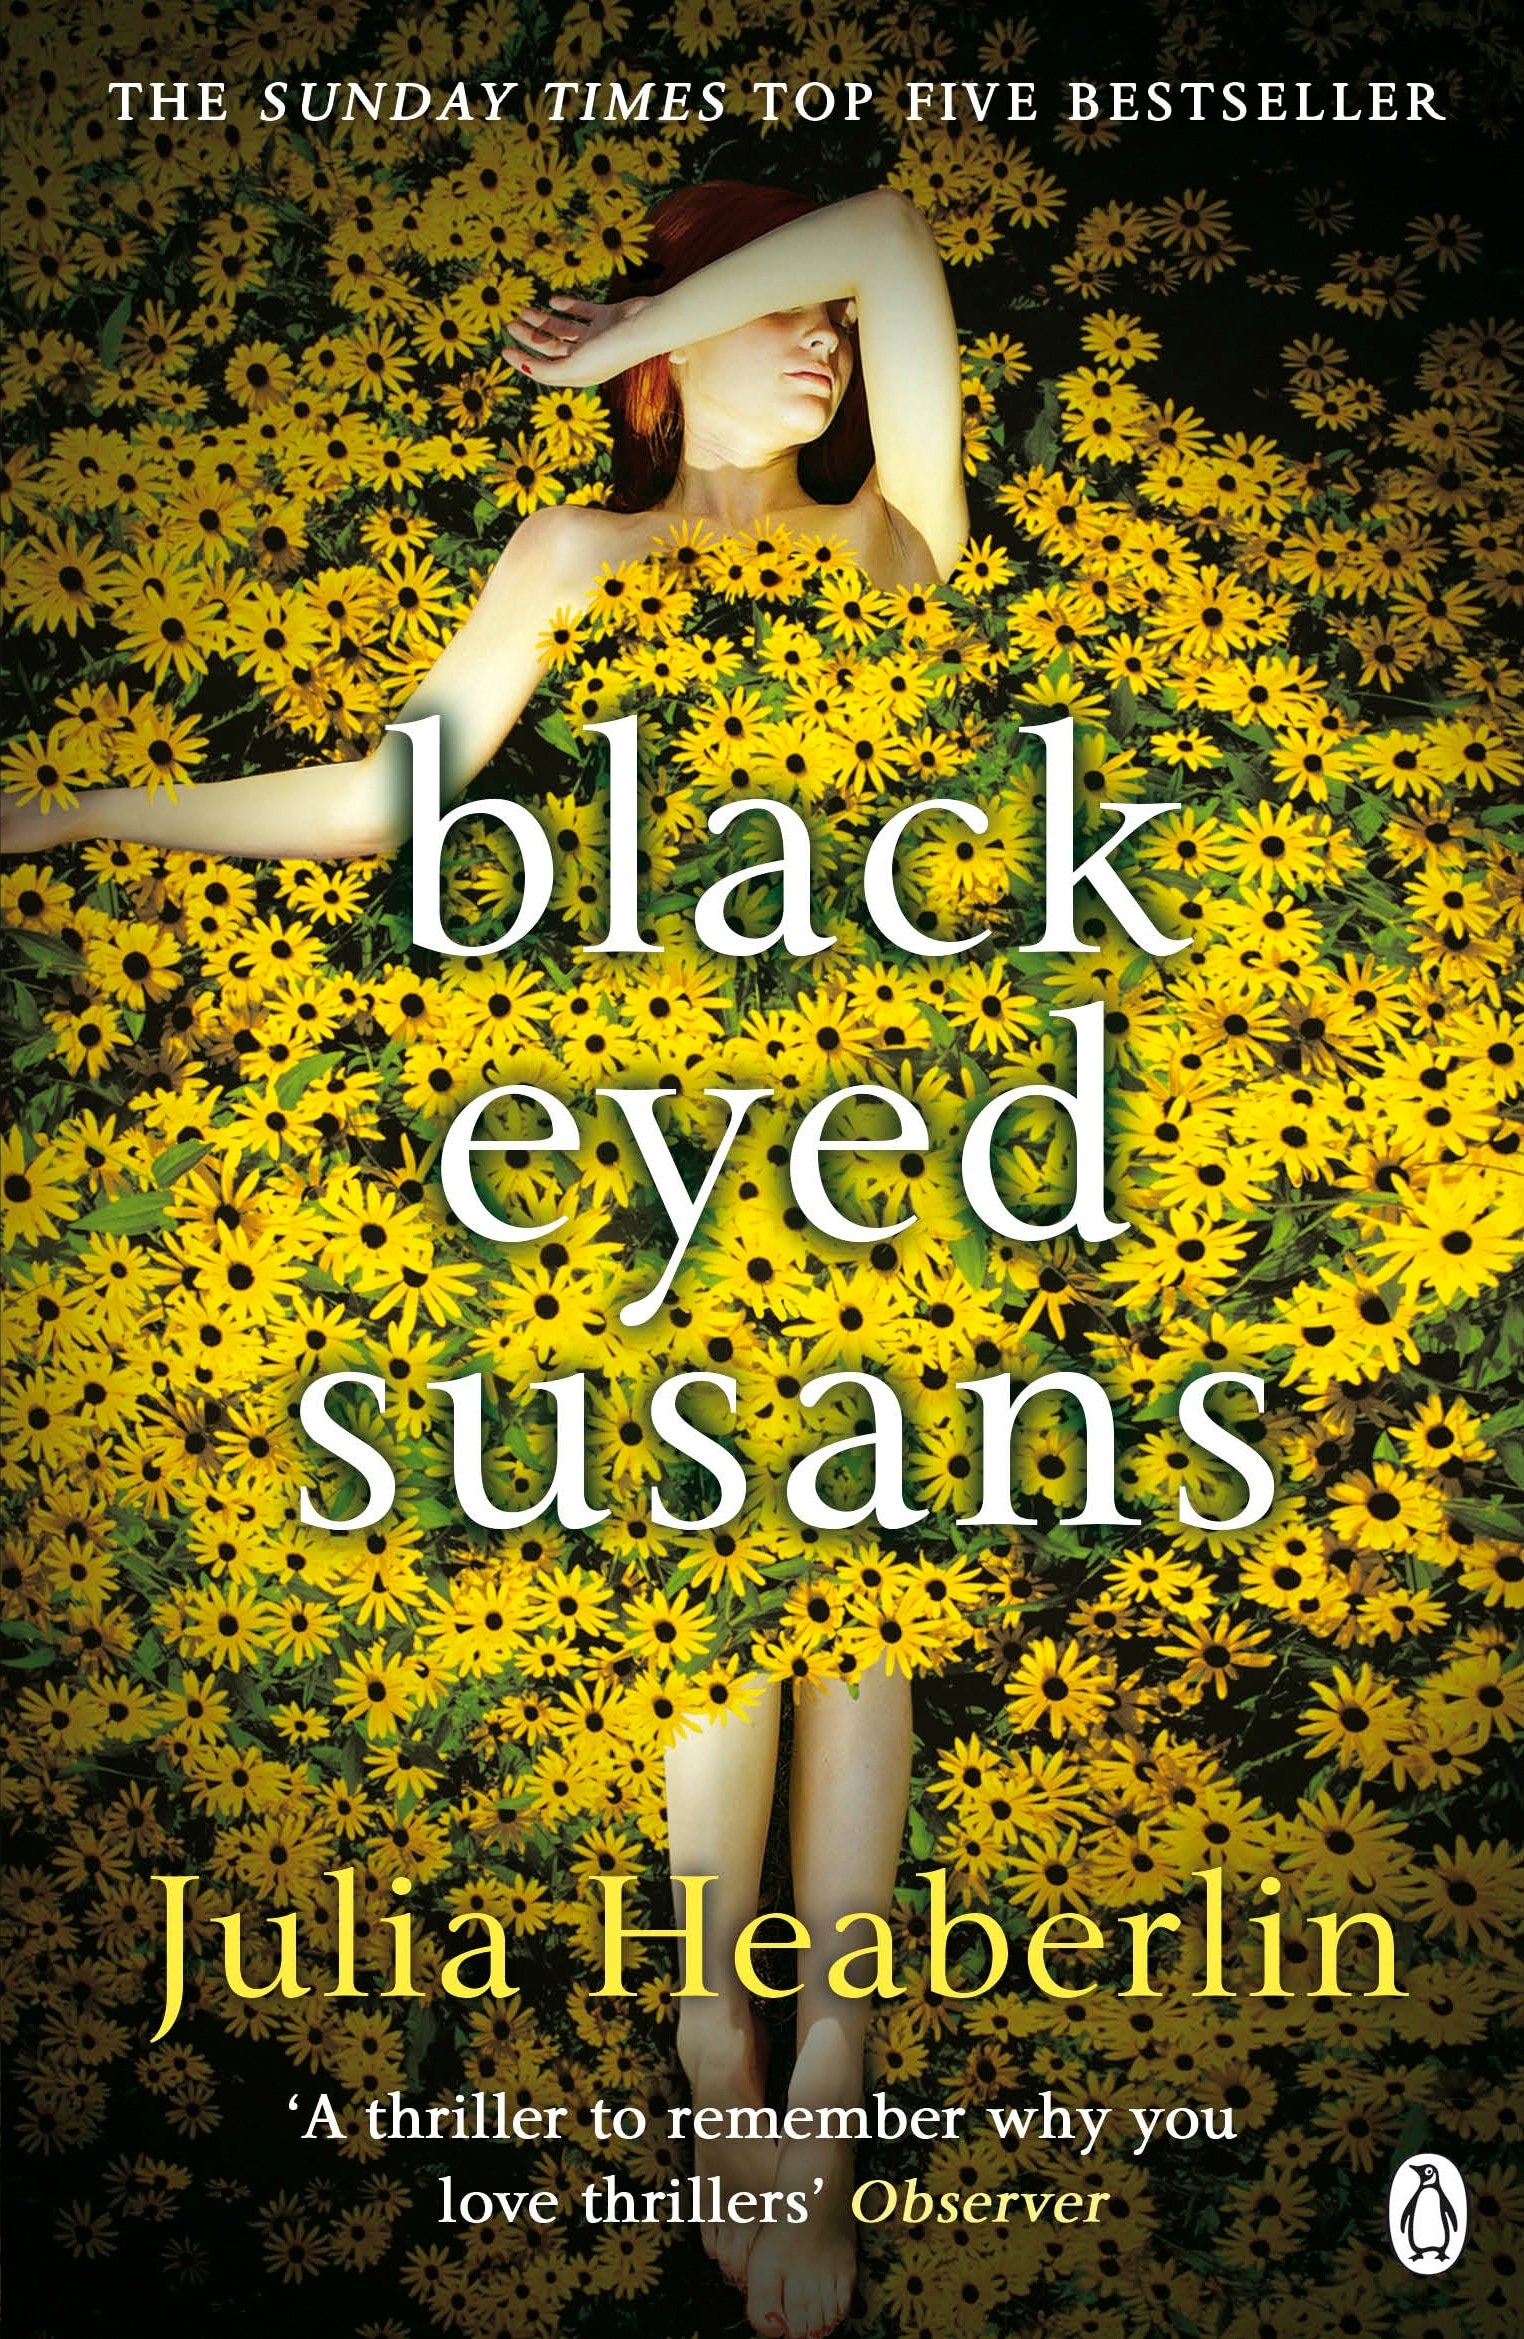 Book “Black-Eyed Susans” by Julia Heaberlin — March 10, 2016